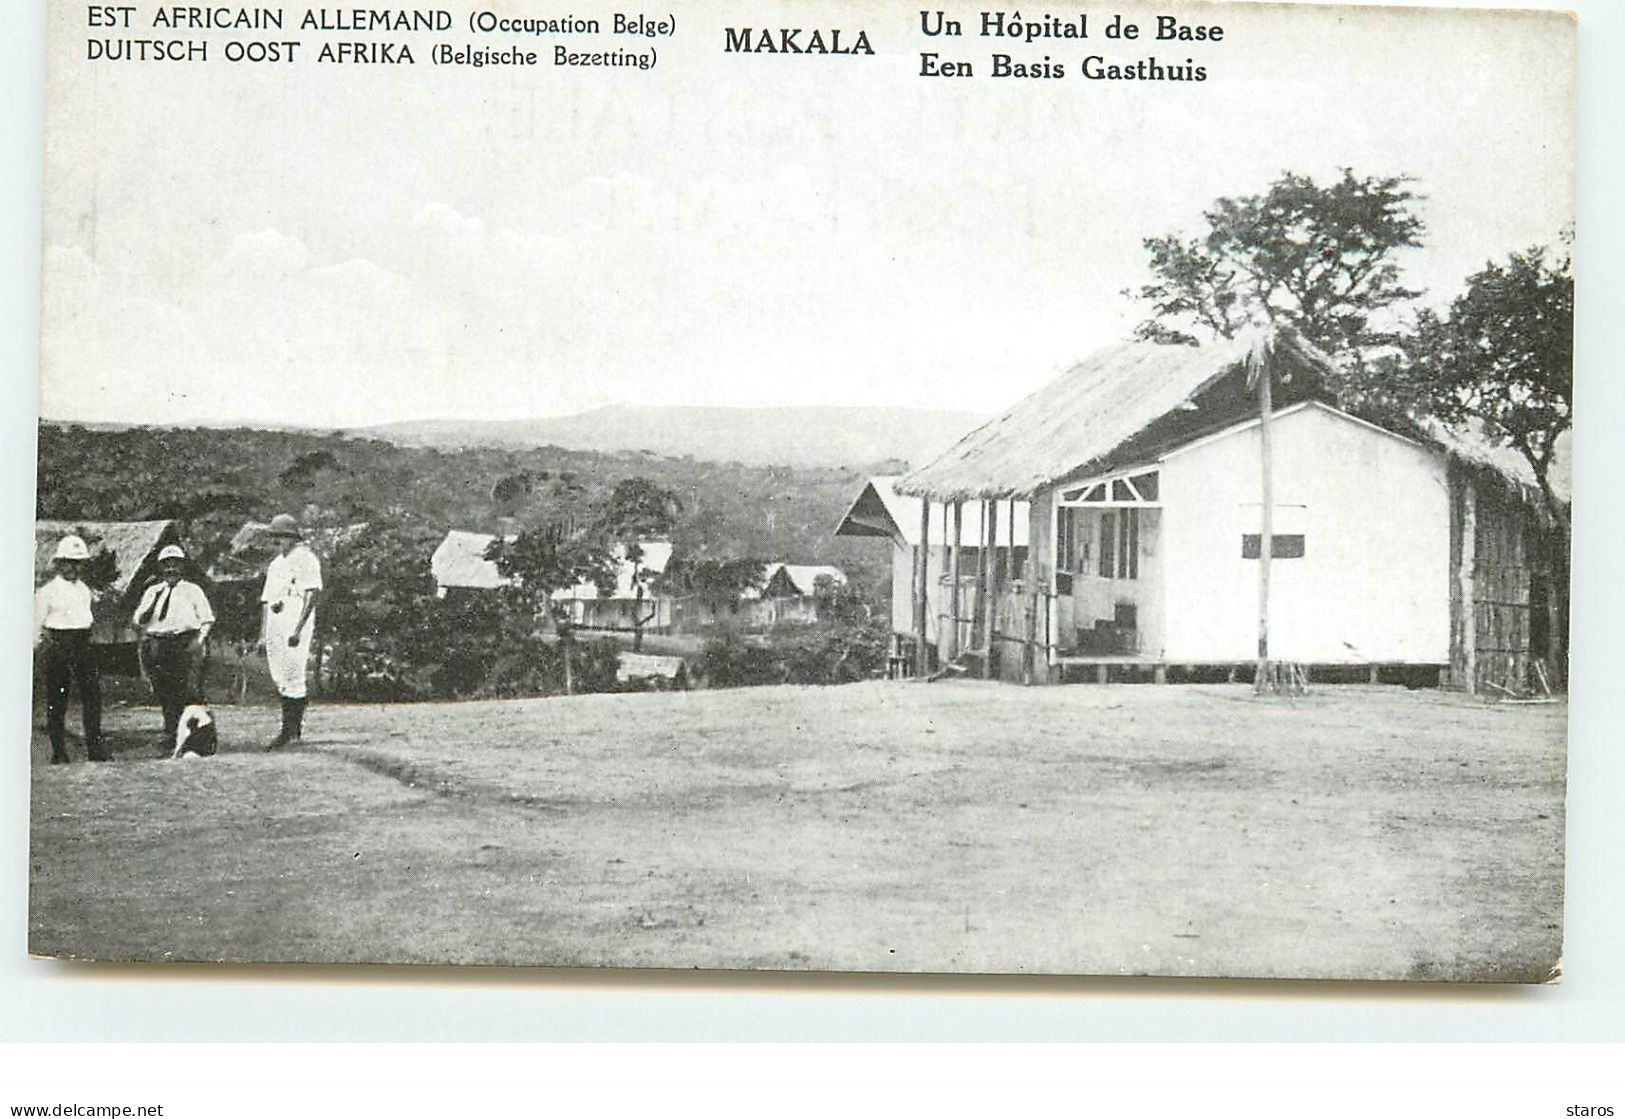 Est Africain Allemand (Occupation Belge) - MAKALA - Un Hôpital De Base - Congo Belge